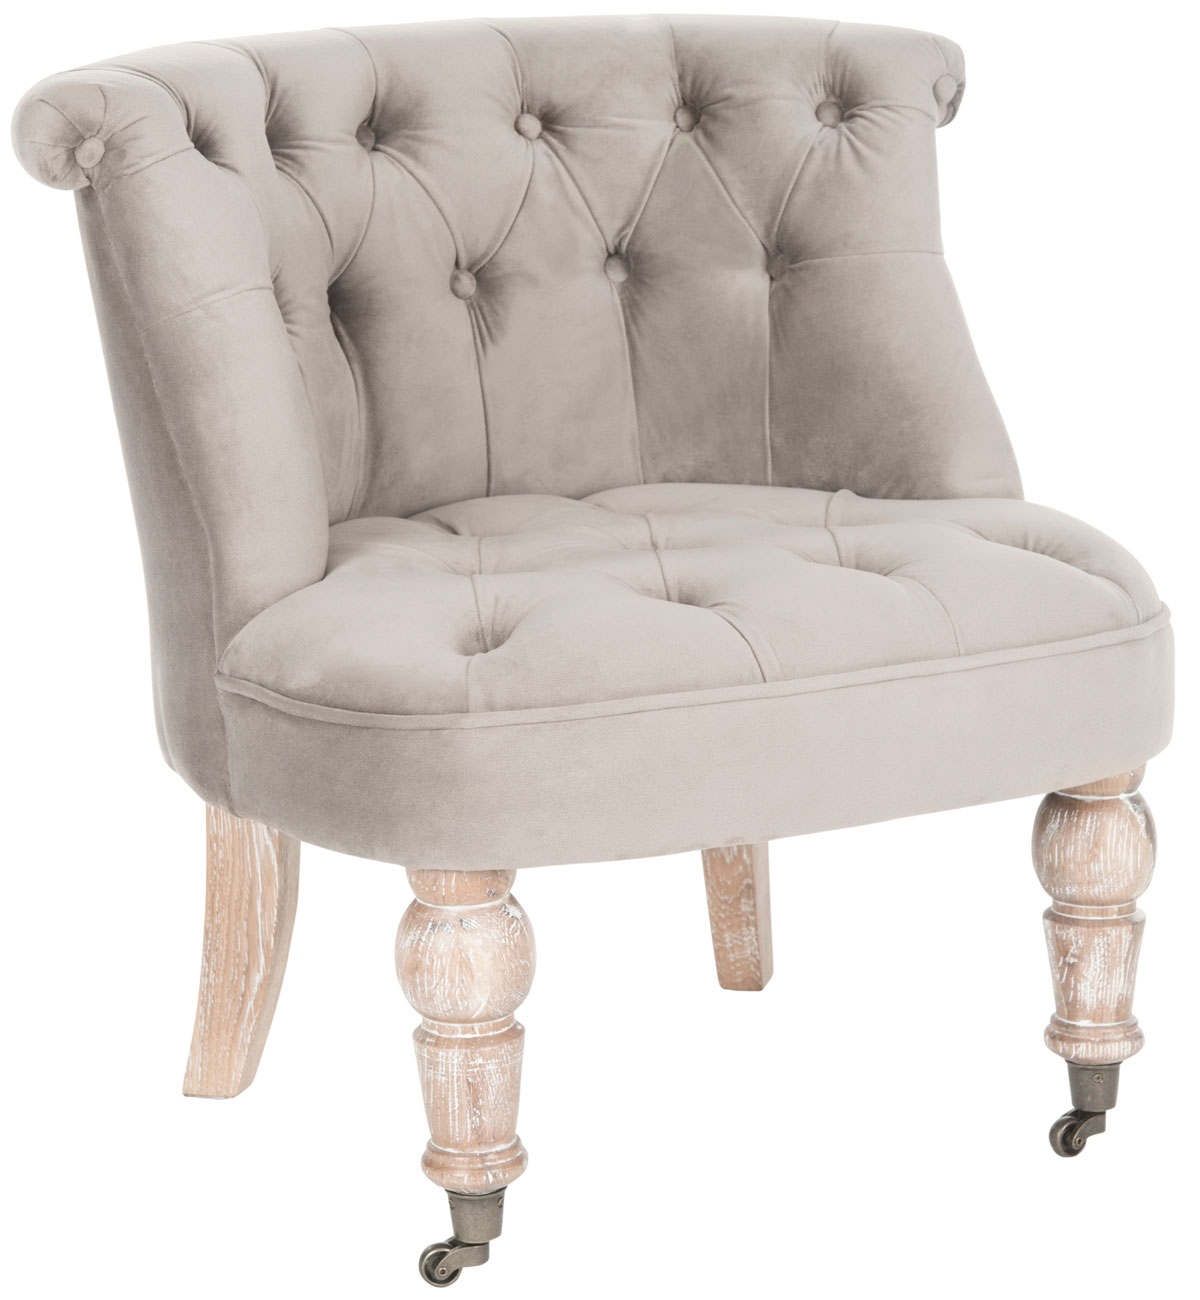 Carlin Tufted Chair - Mushroom Taupe/White Wash - Arlo Home - Image 1